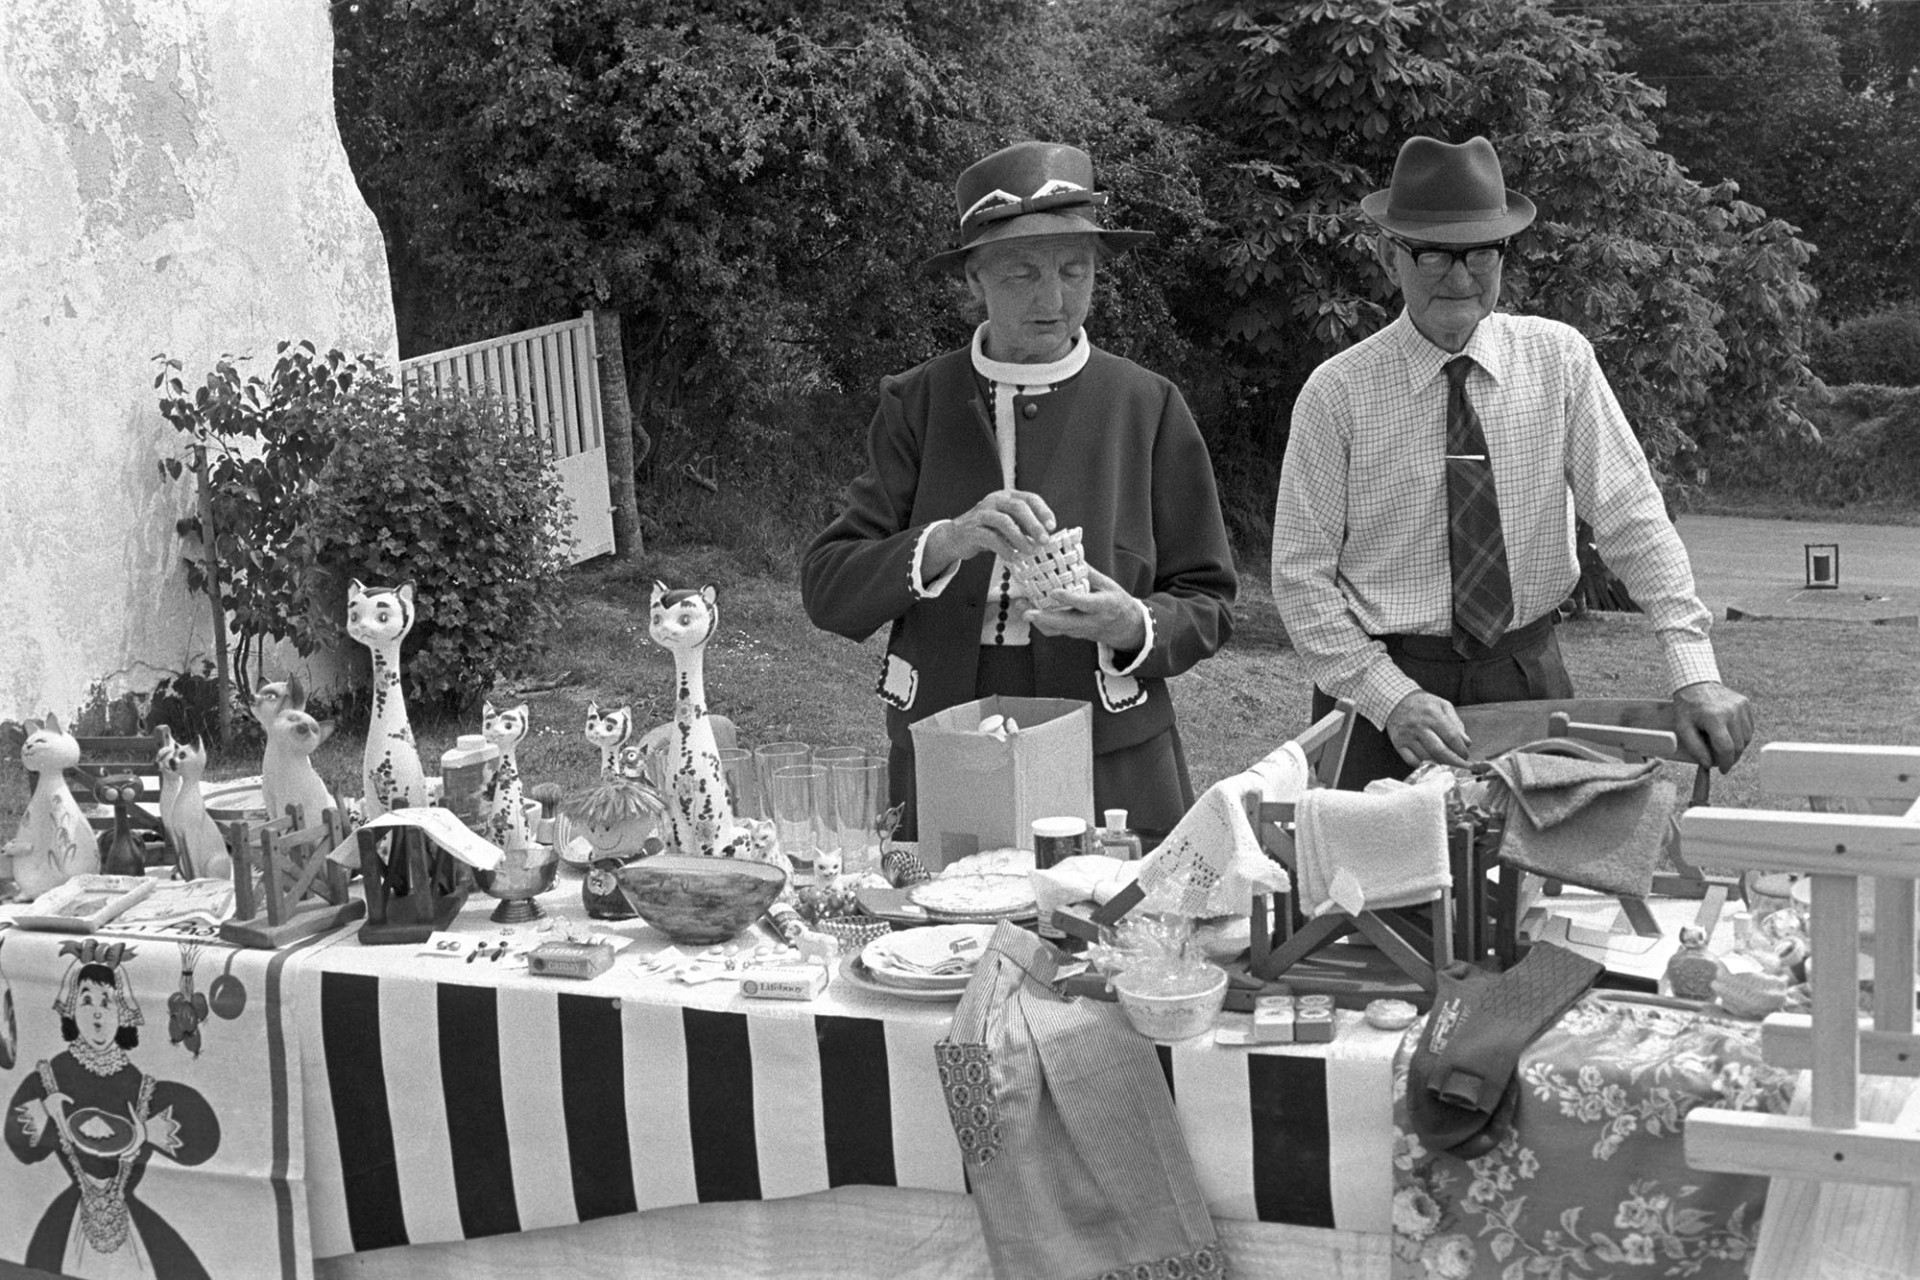 Church Fete jumble stall, couple arranging goods. 
[A couple arranging a bric-a-brac stall at Iddesleigh Church Fete.]